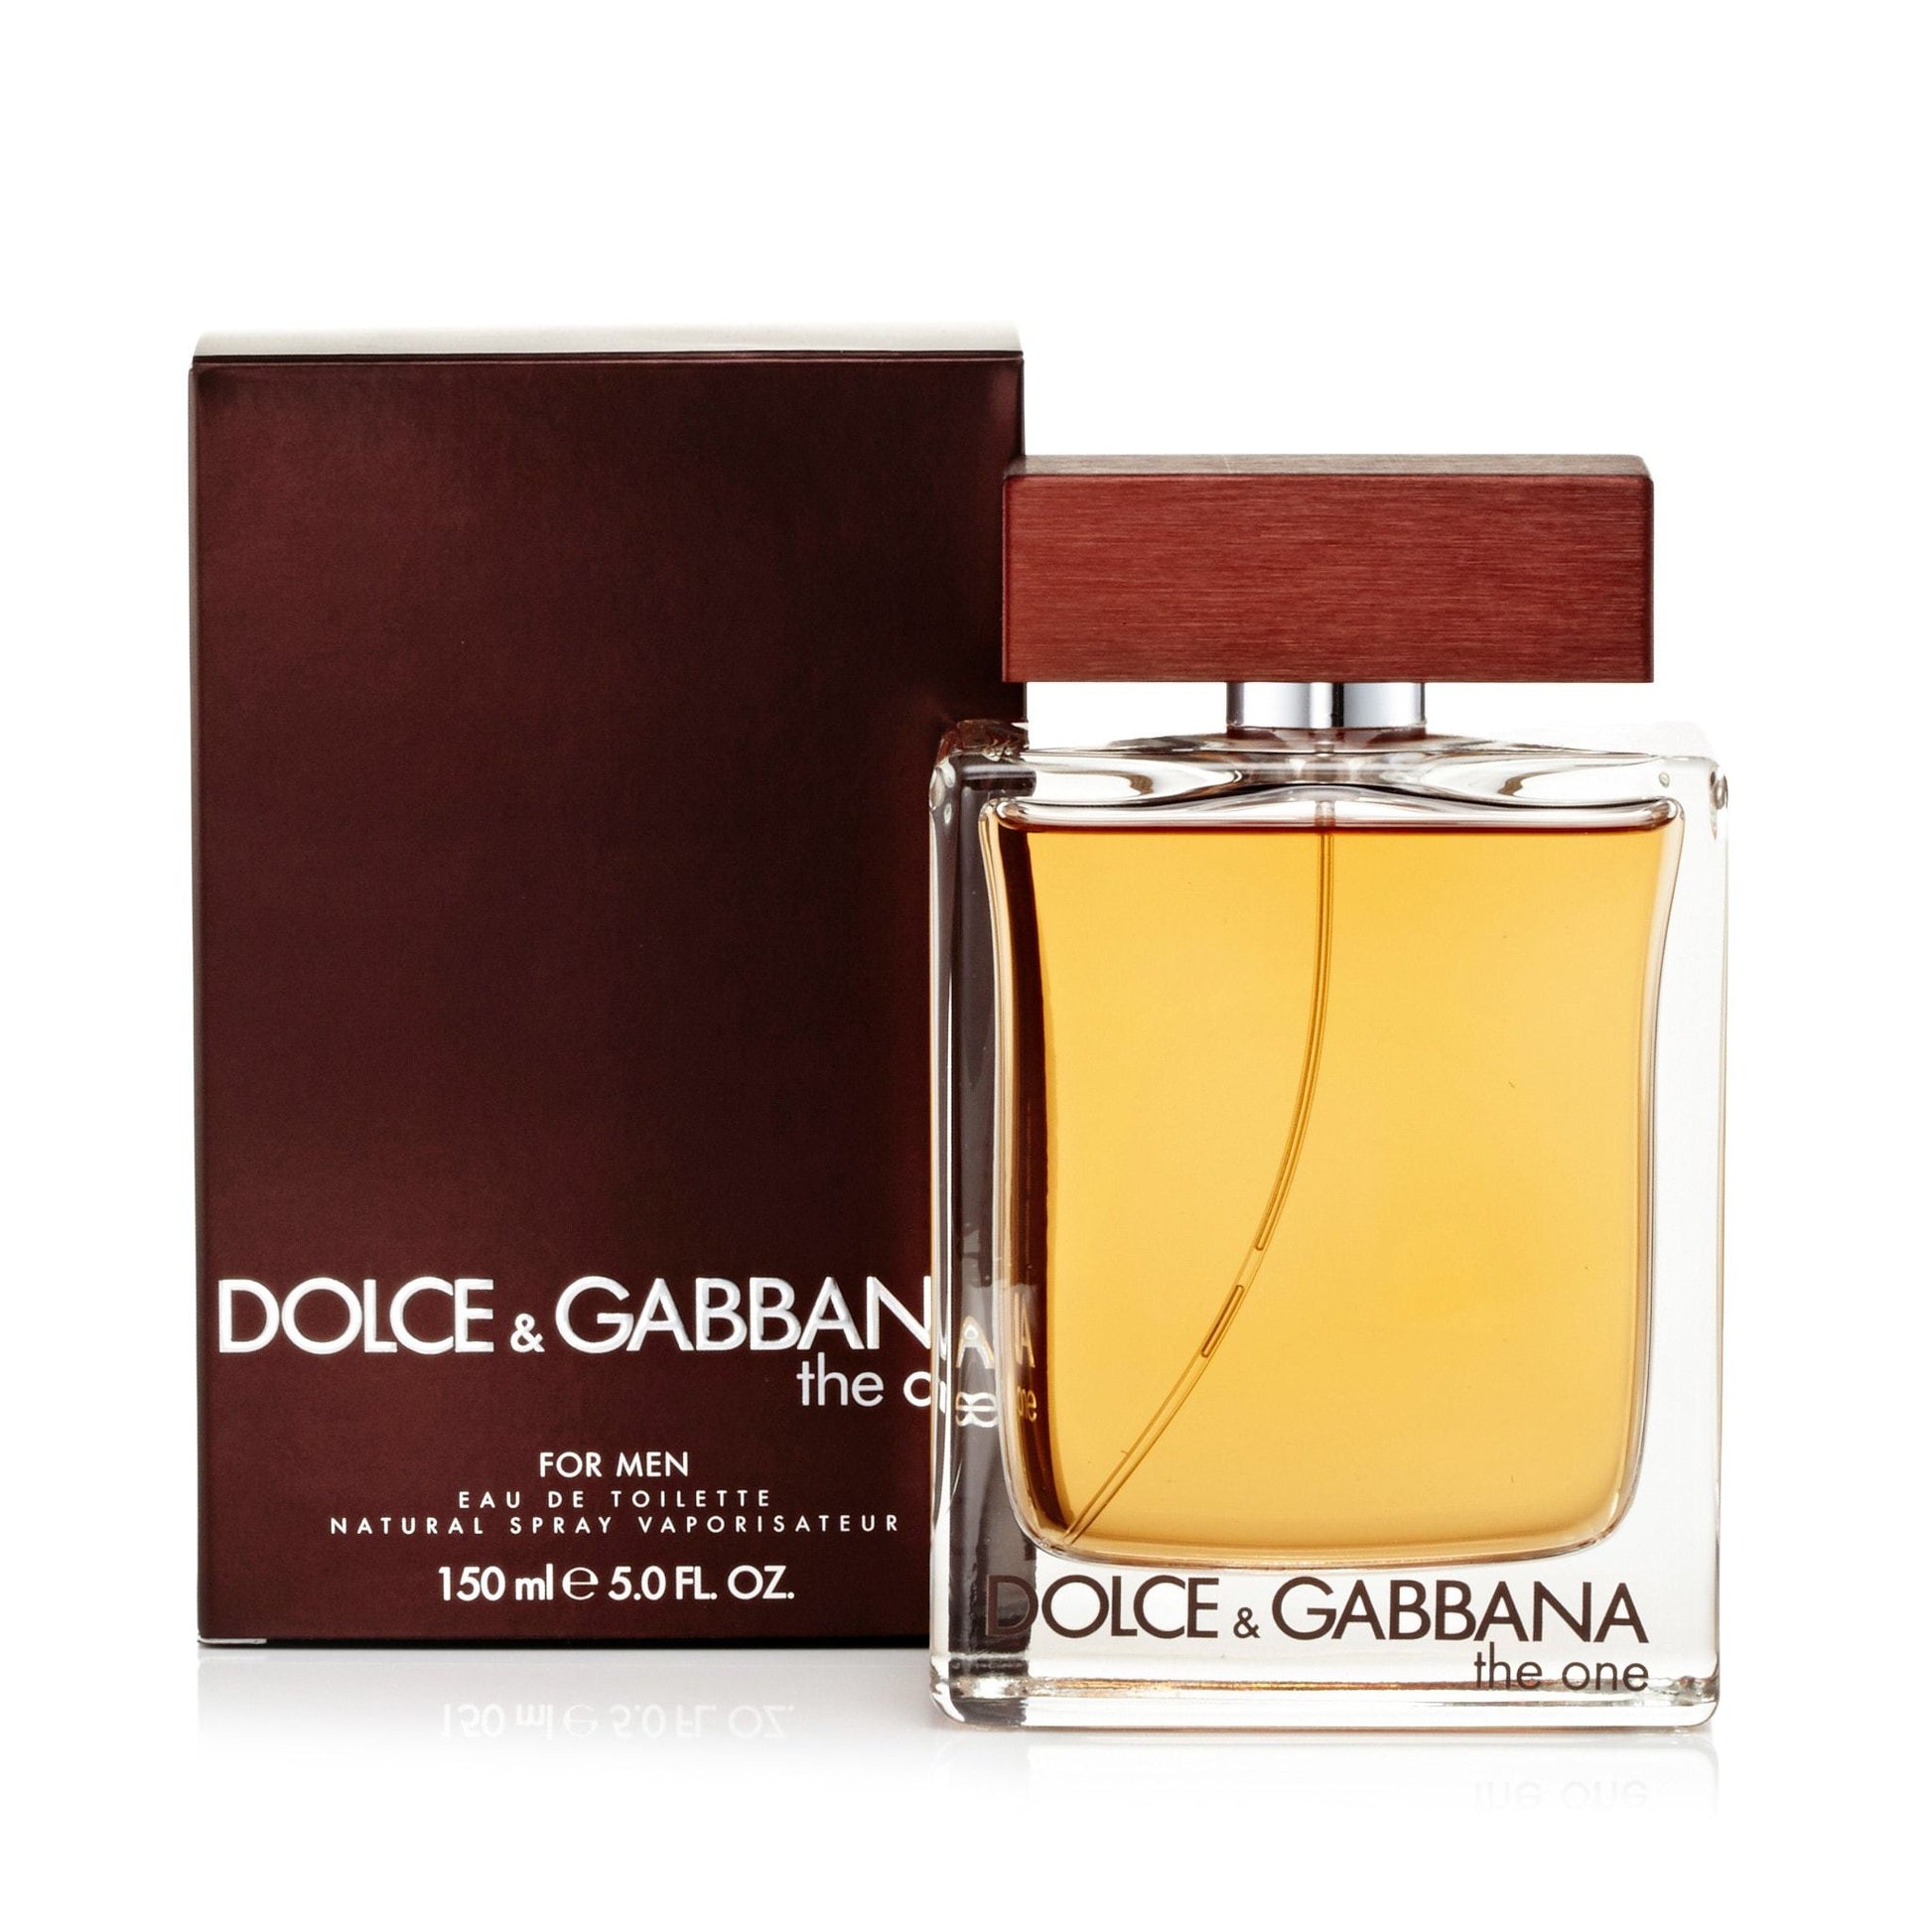 The One Eau de Toilette Spray for Men by Dolce & Gabbana, Product image 2